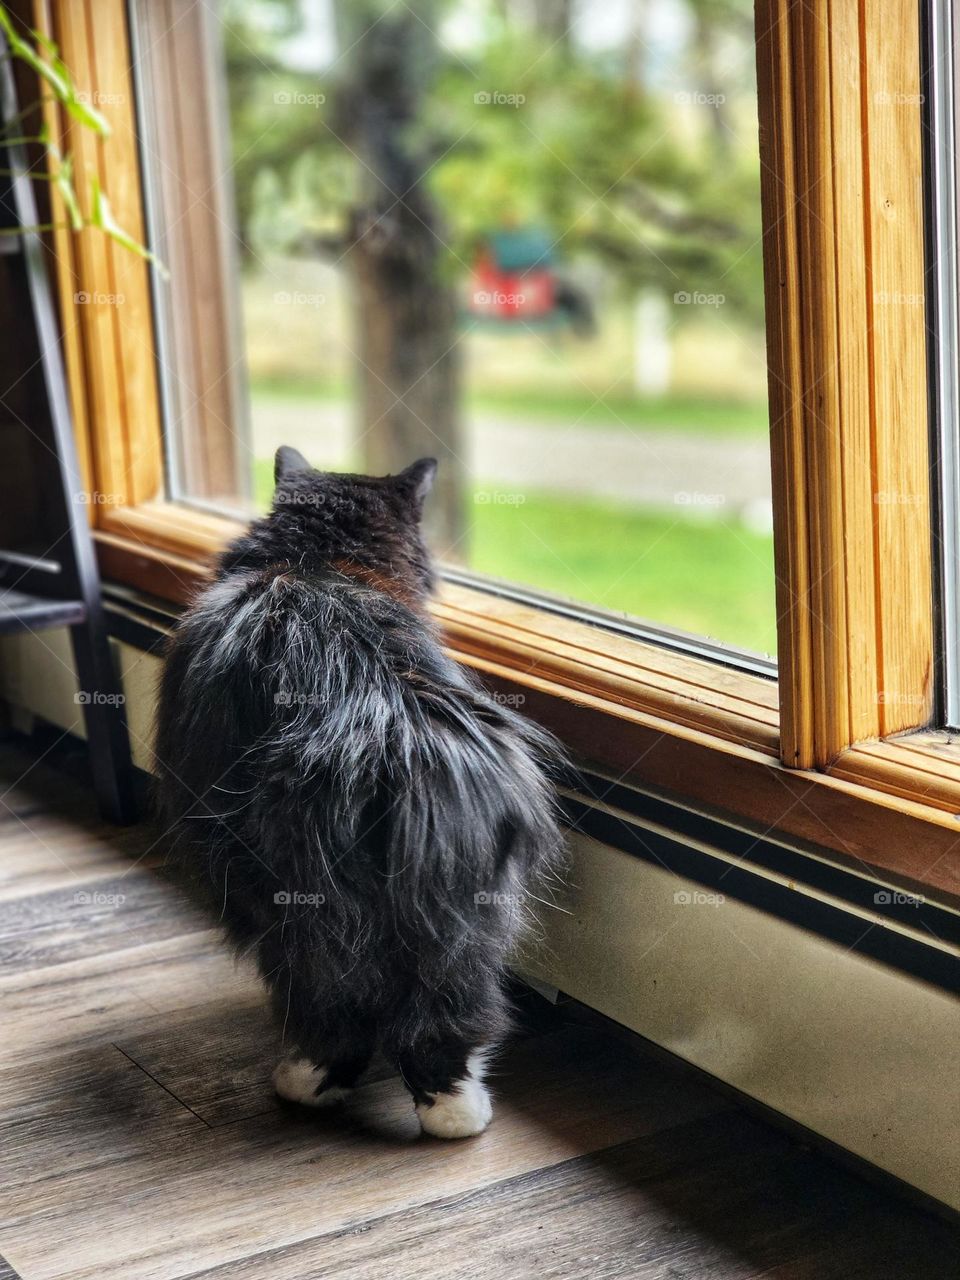 Kitty cat watching the birds through the window